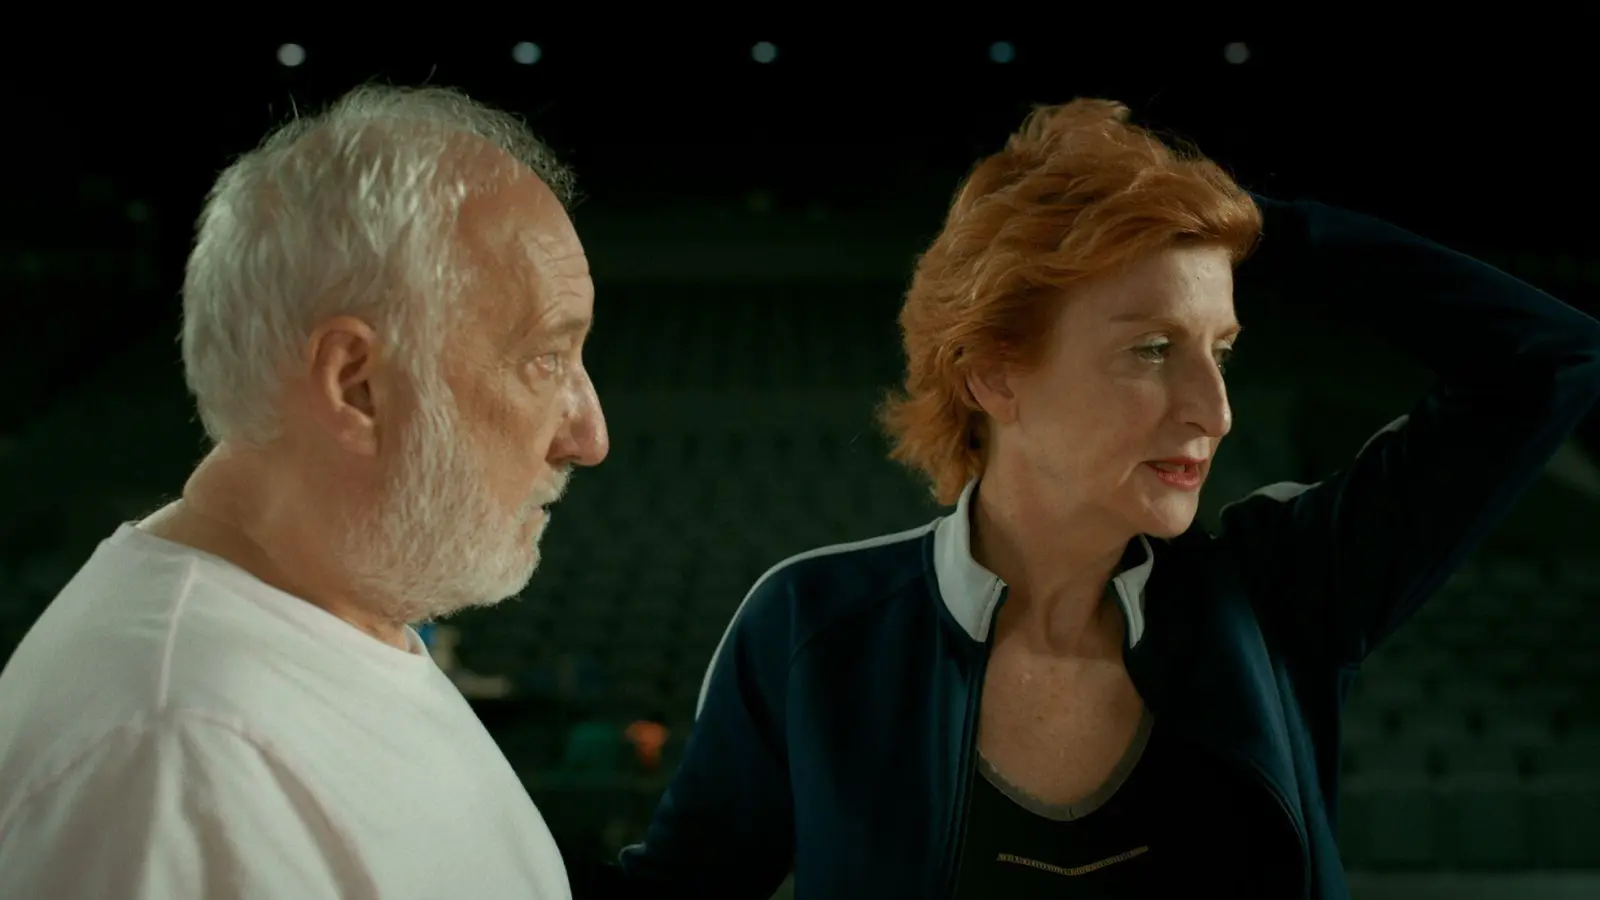 François Berléand als Germain und Maria Ribot als La Ribot in einer Szene des Films „Last Dance“. (Foto: -/Arsenal Filmverleih/dpa)